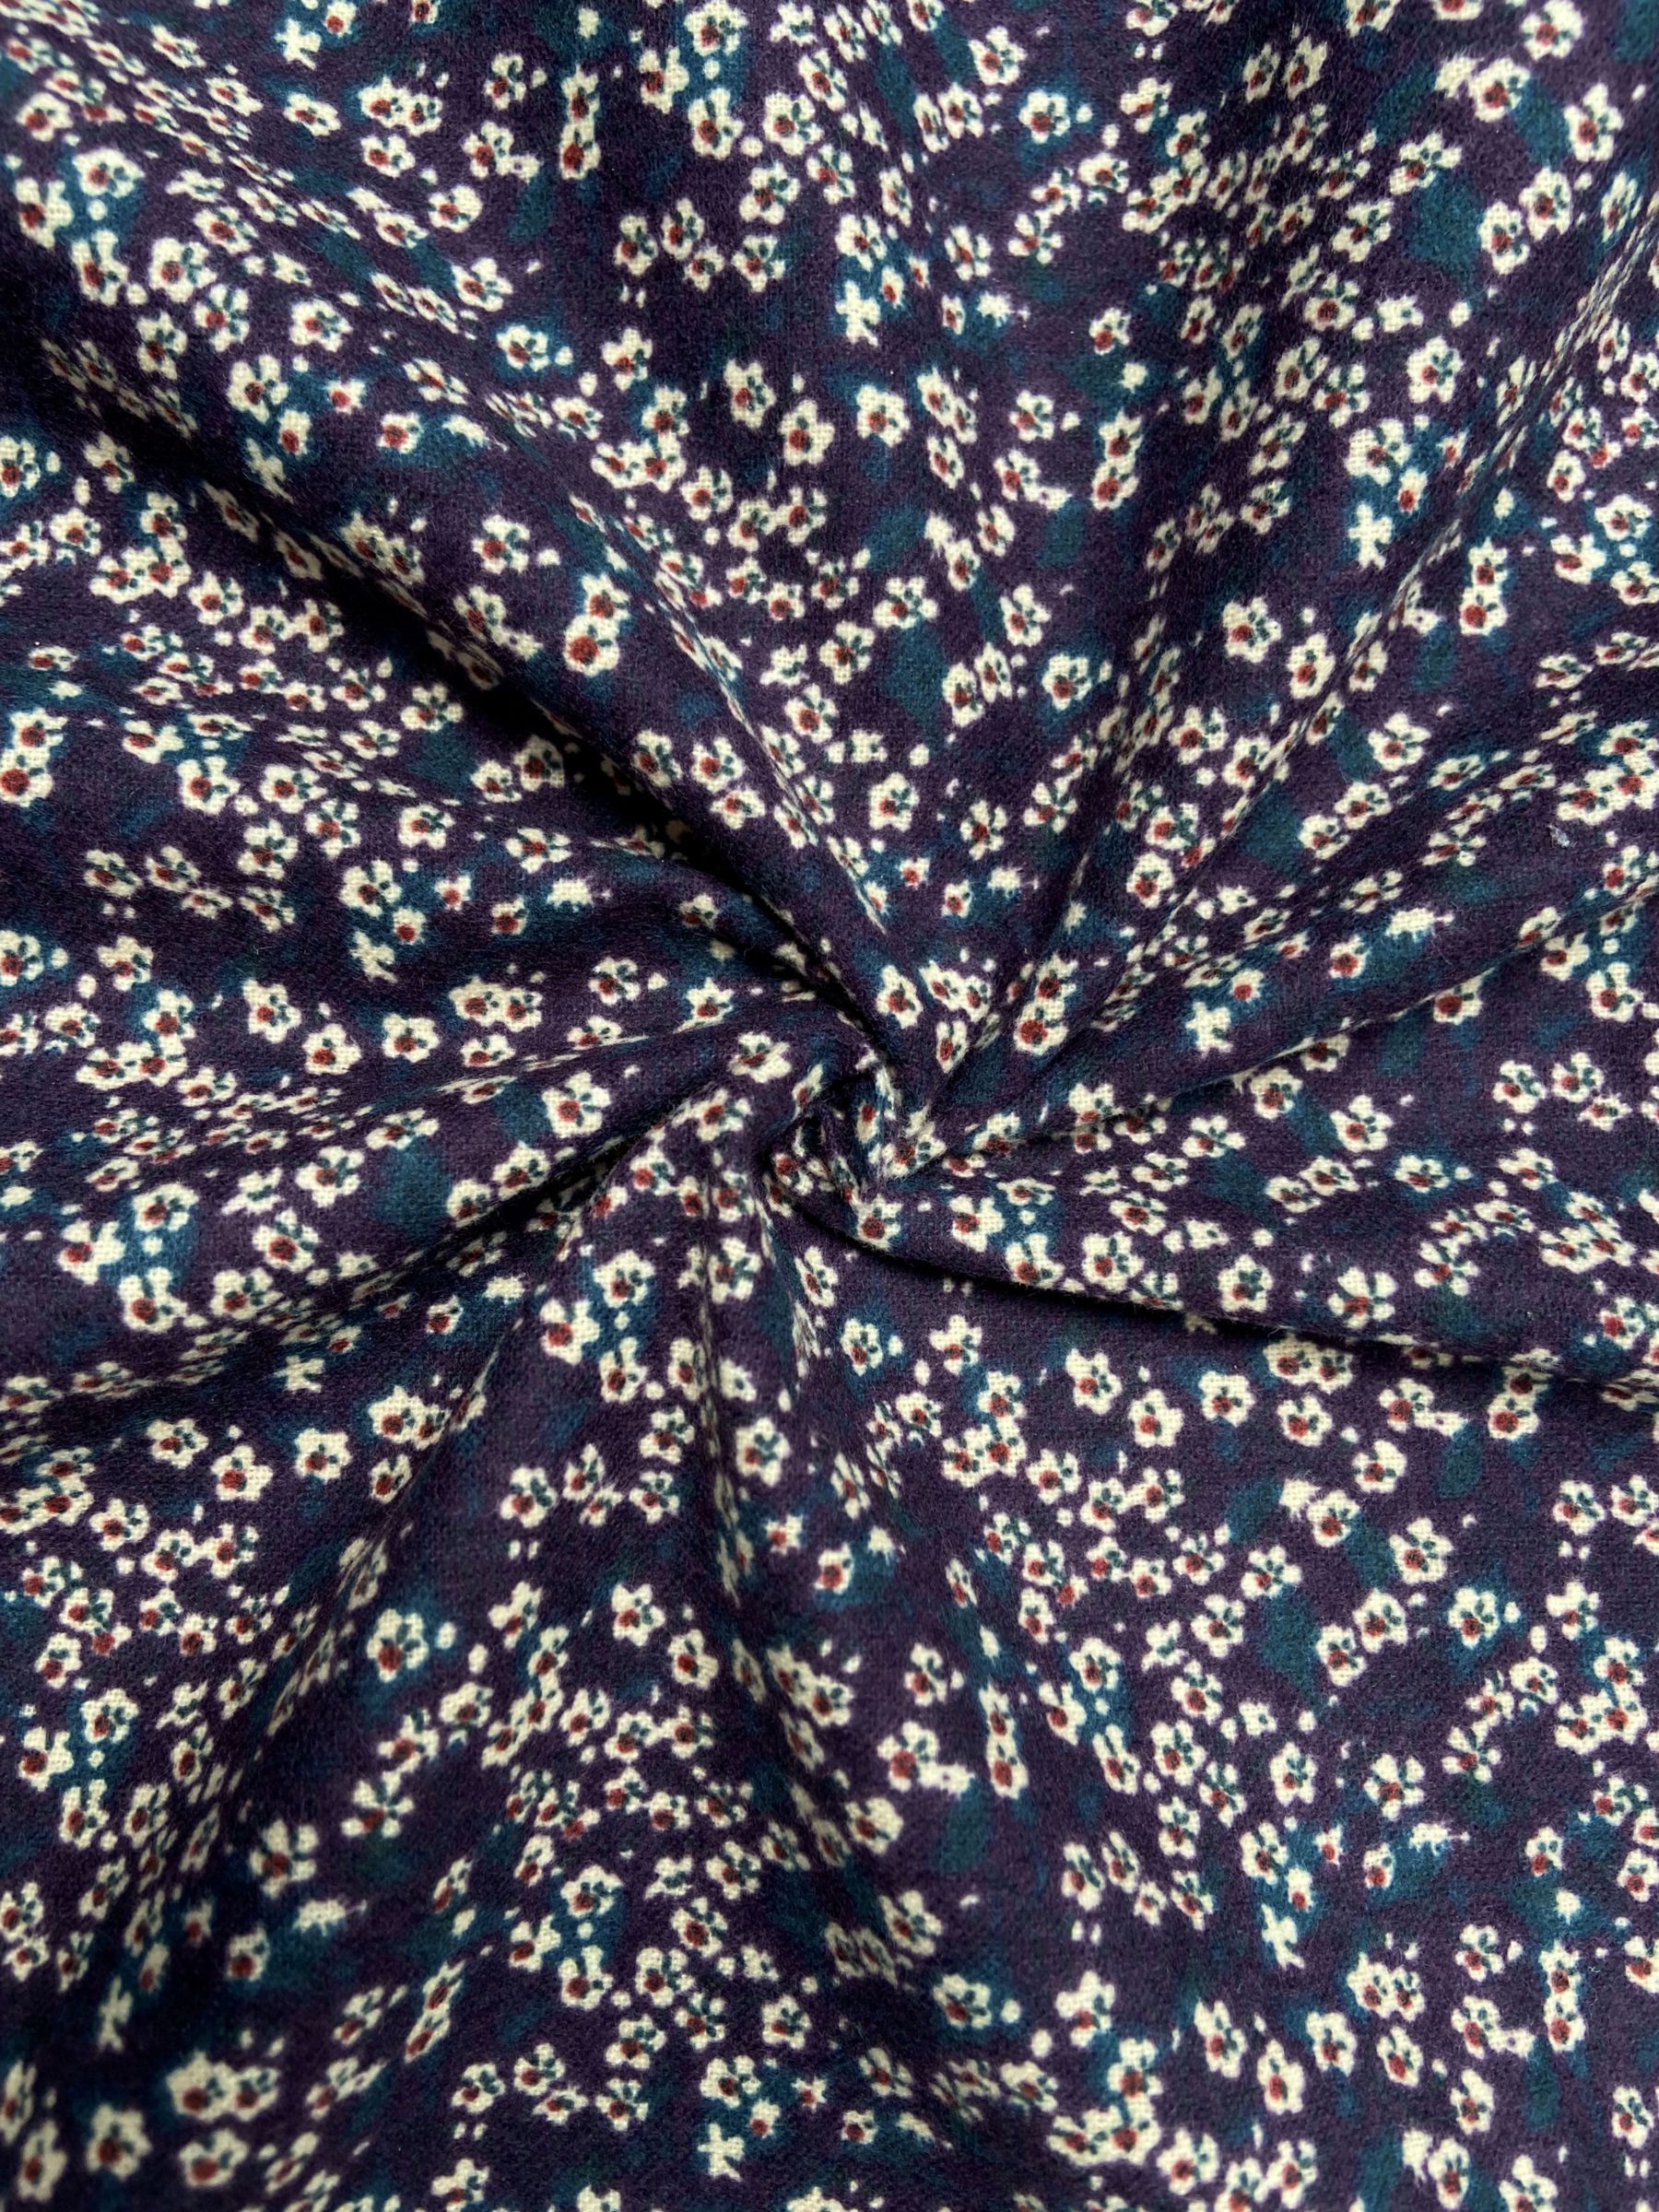 Viscount Textiles Mini Florals Fabric, Purple